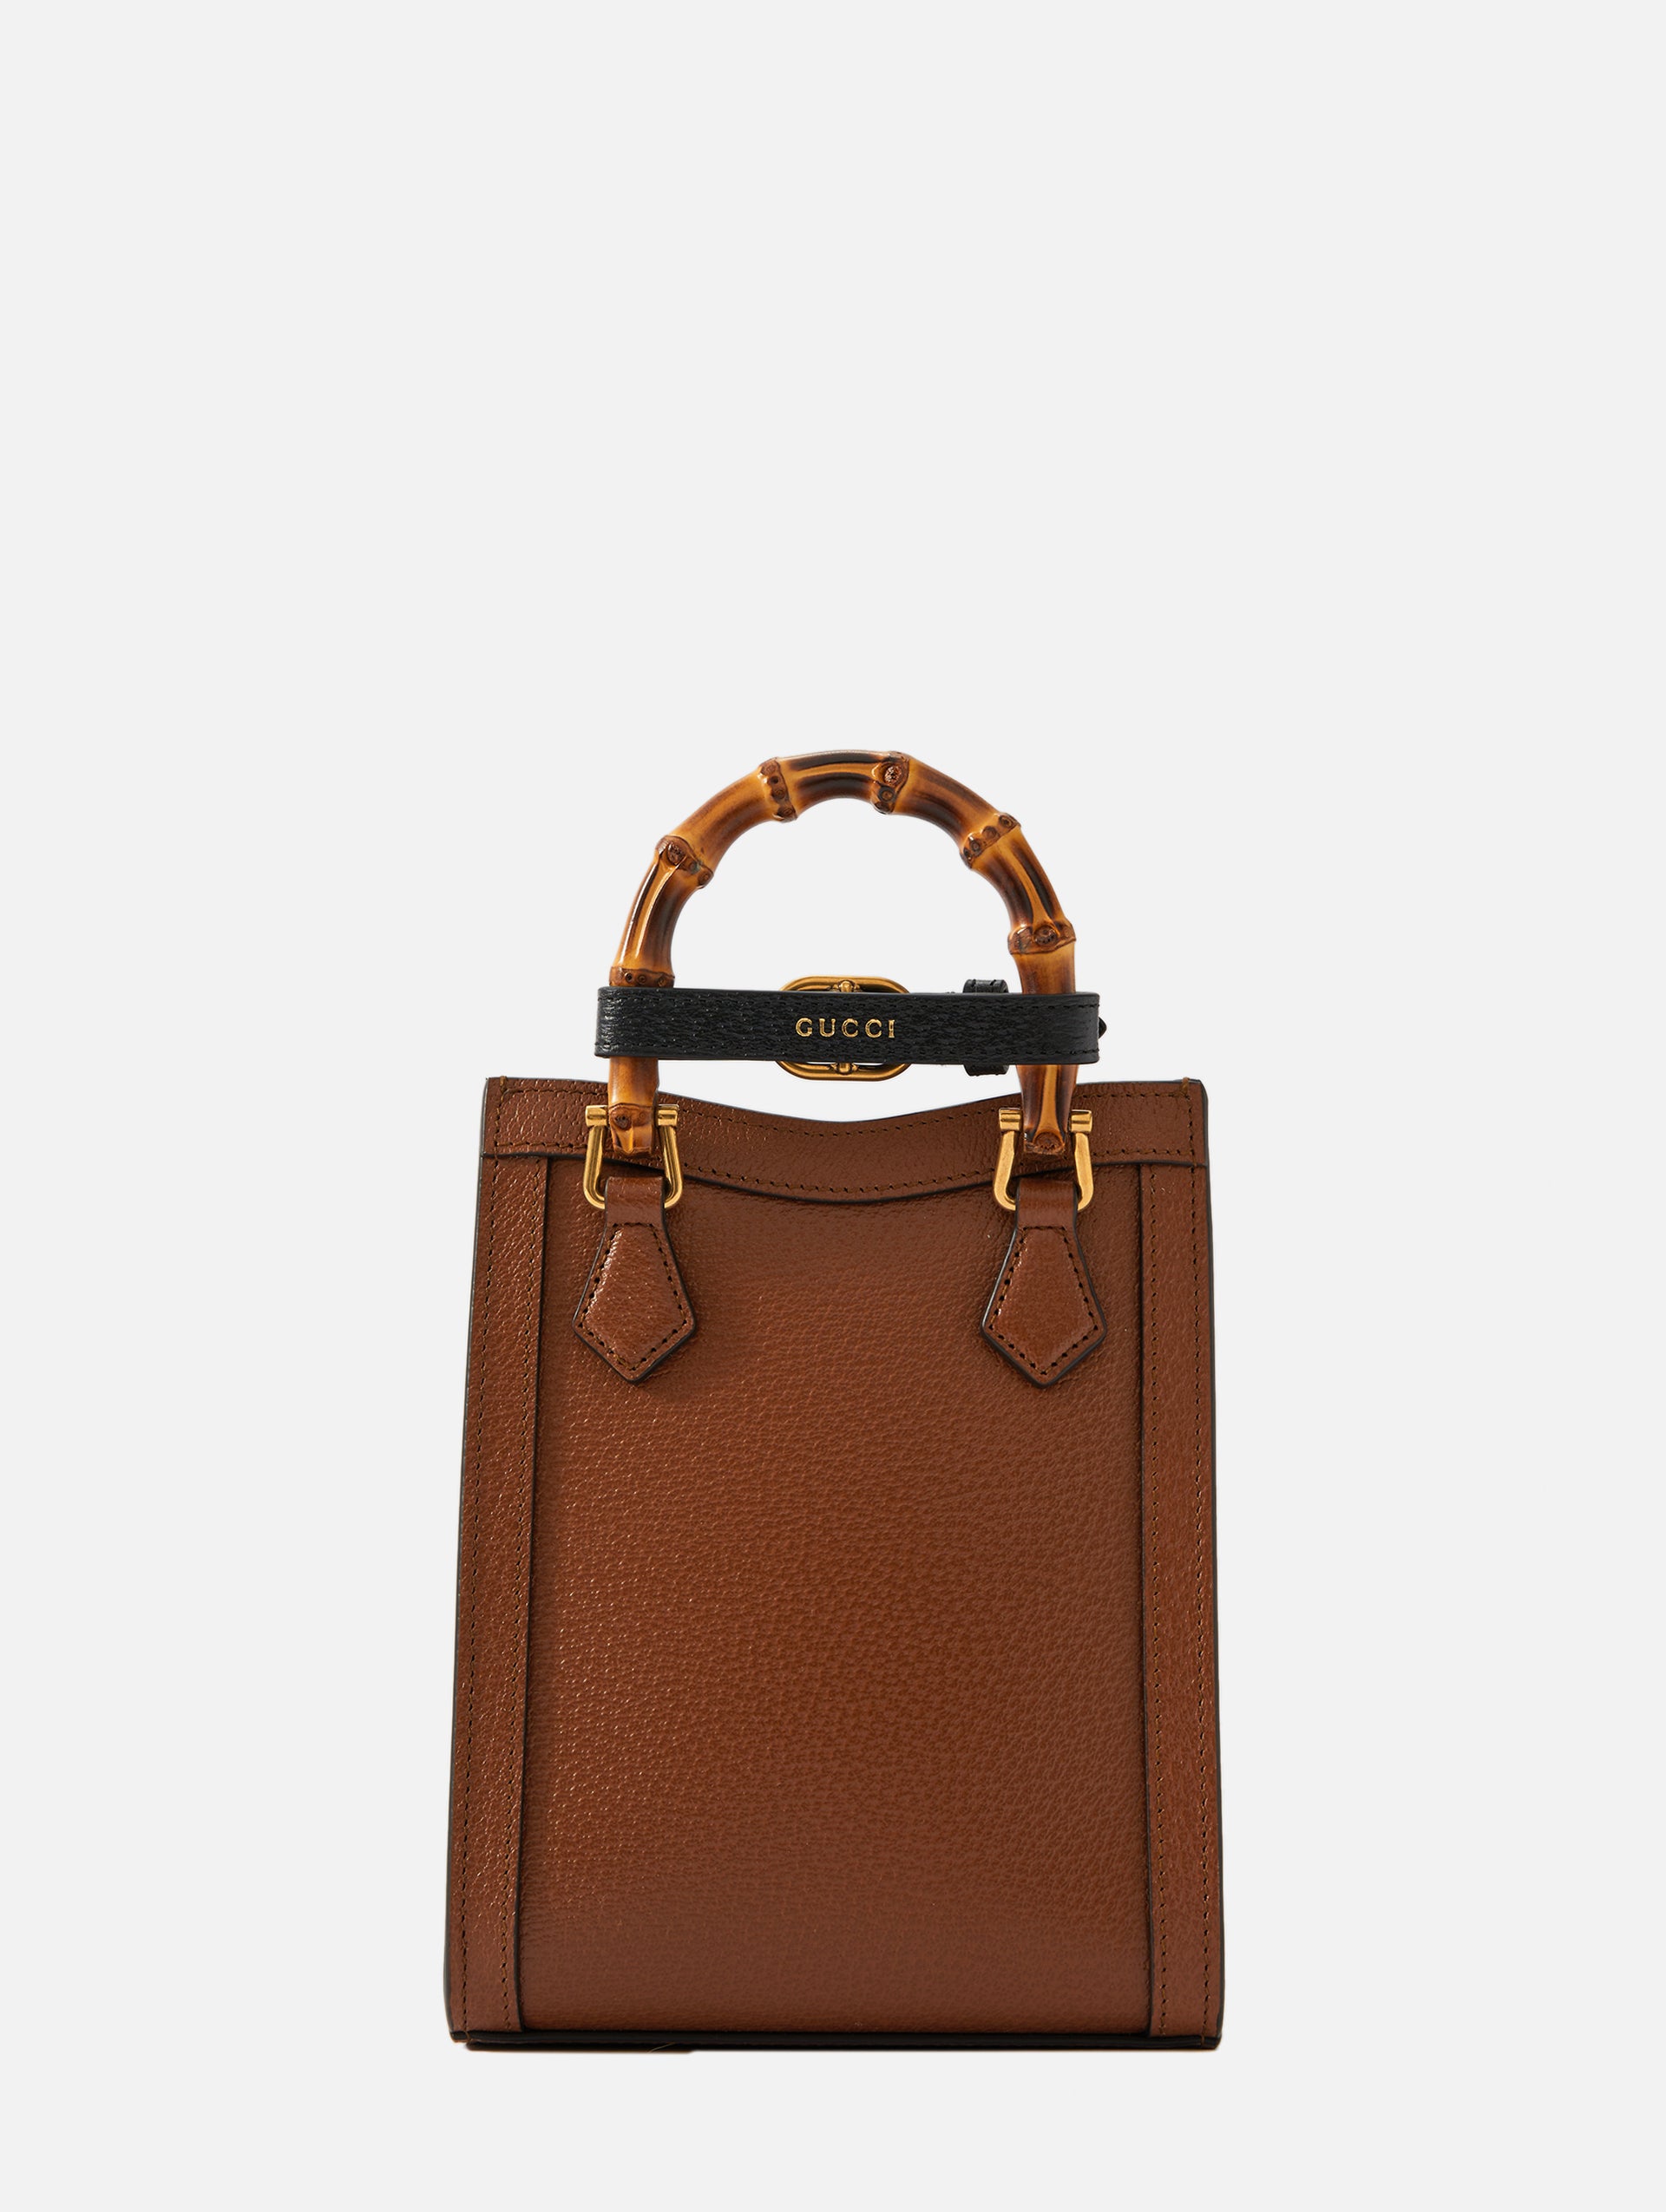 Gucci Bamboo Handle Bag, One Size | Elysewalker